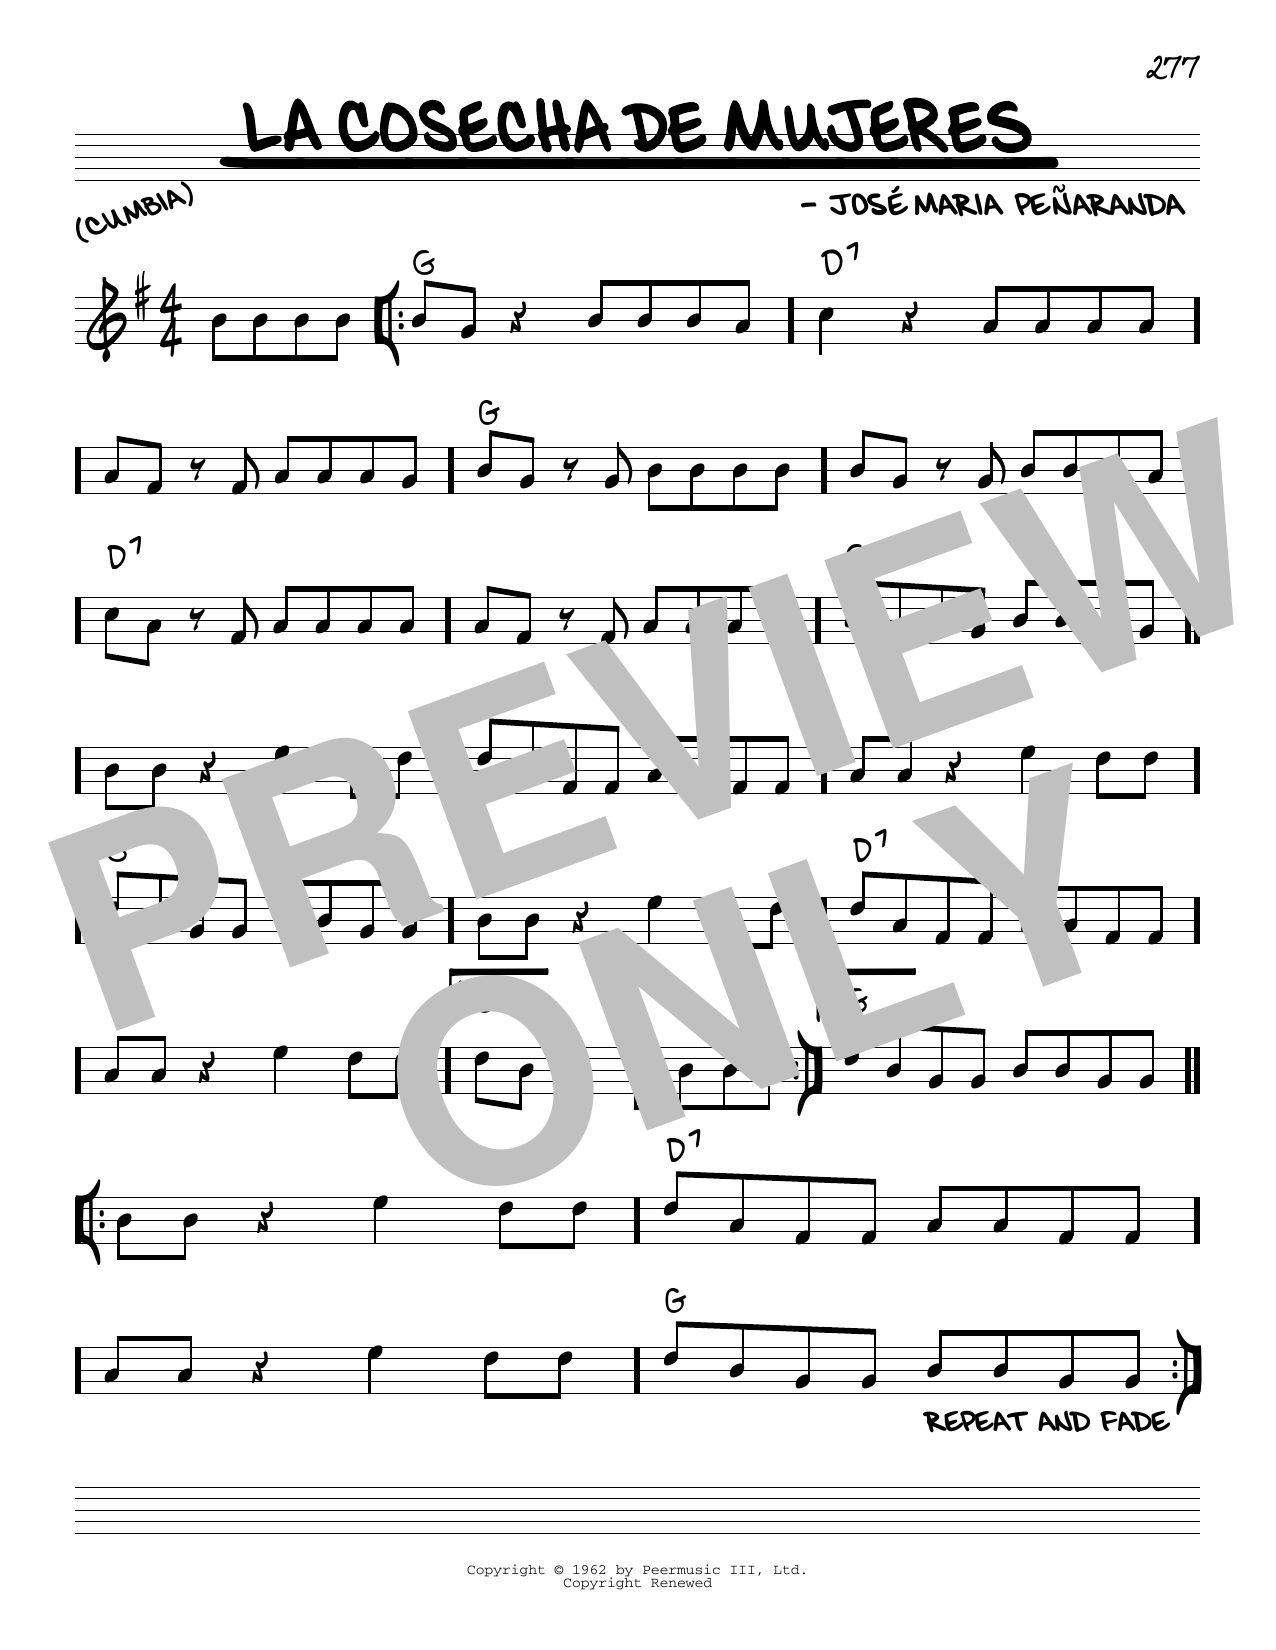 Download José Maria Peñaranda La Cosecha De Mujeres Sheet Music and learn how to play Real Book – Melody & Chords PDF digital score in minutes